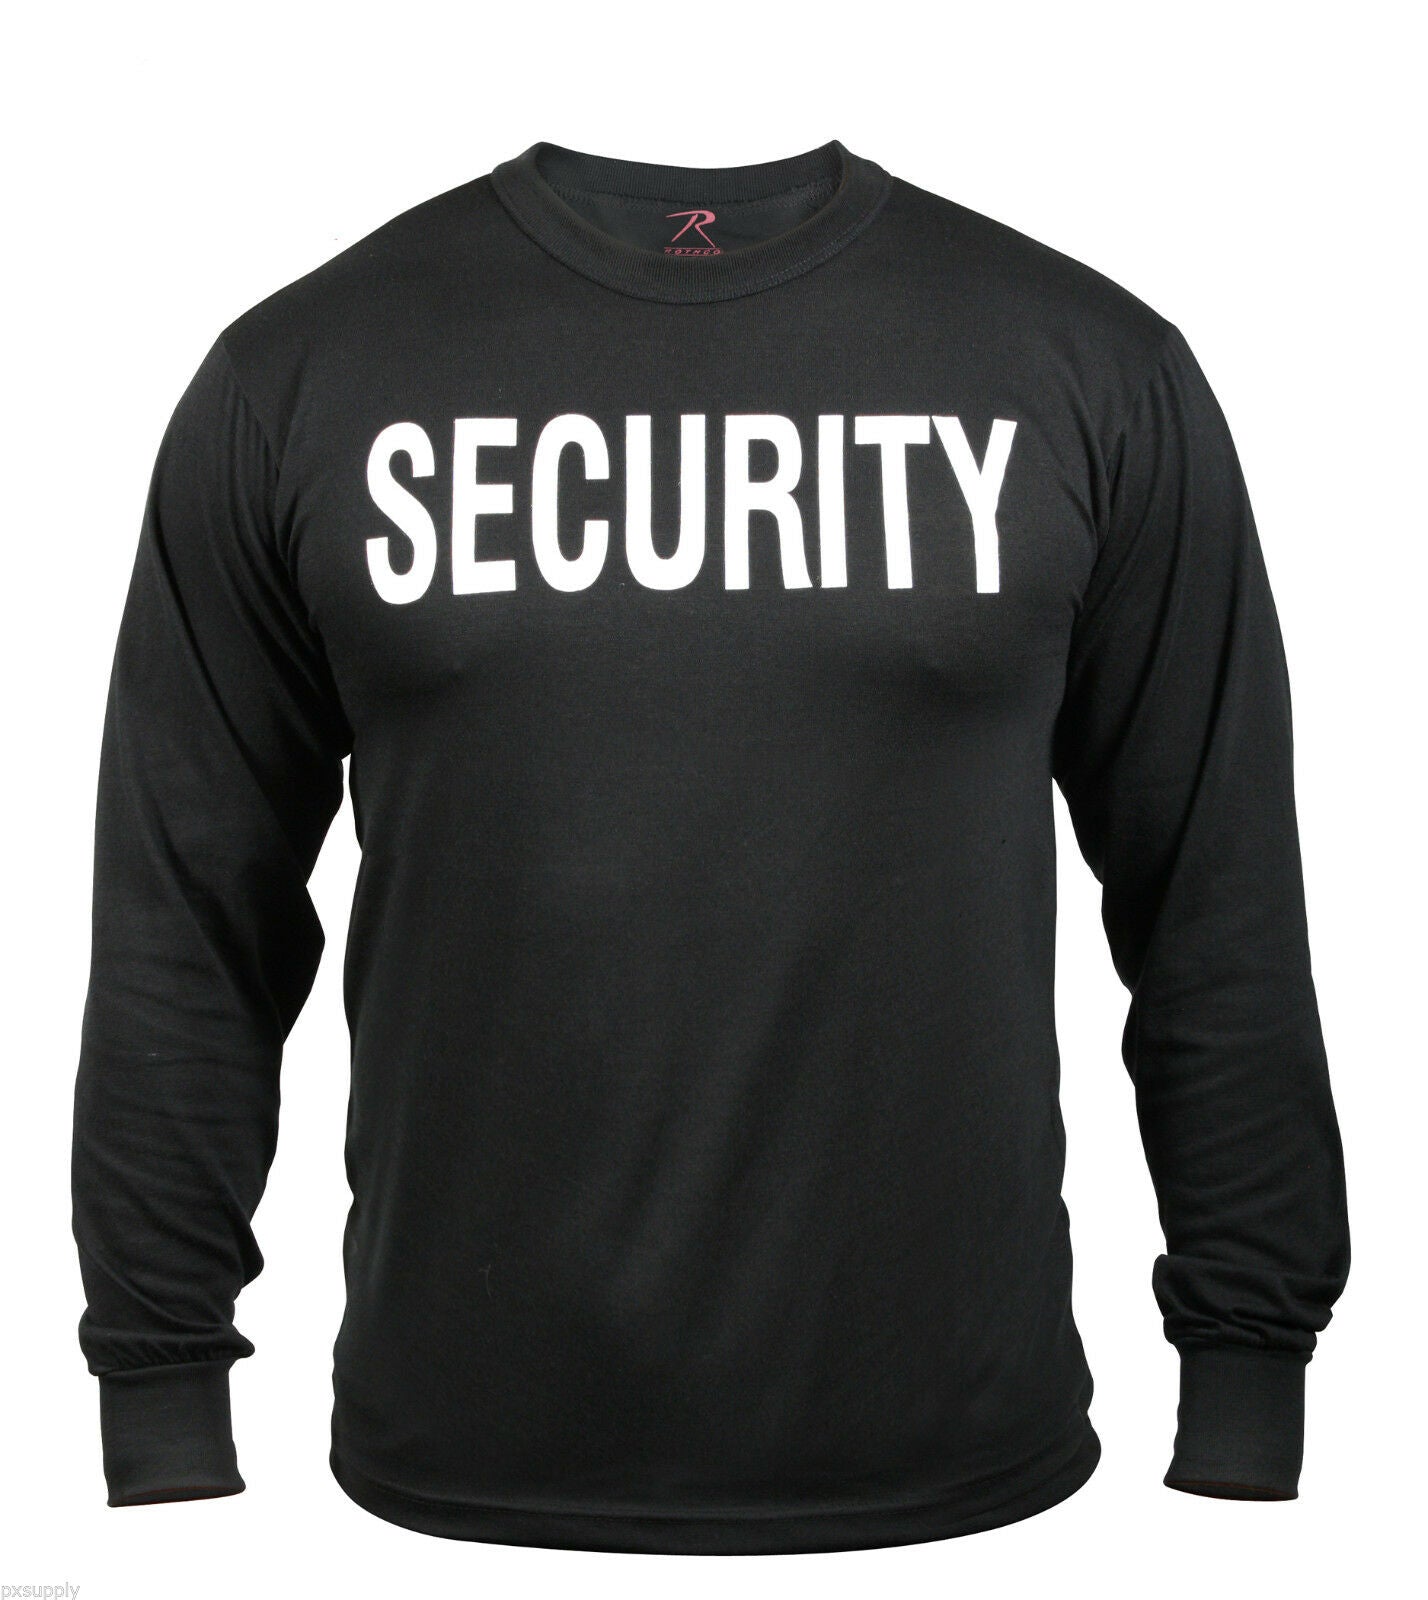 Rothco 2-Sided Security Long Sleeve T-Shirt - Black